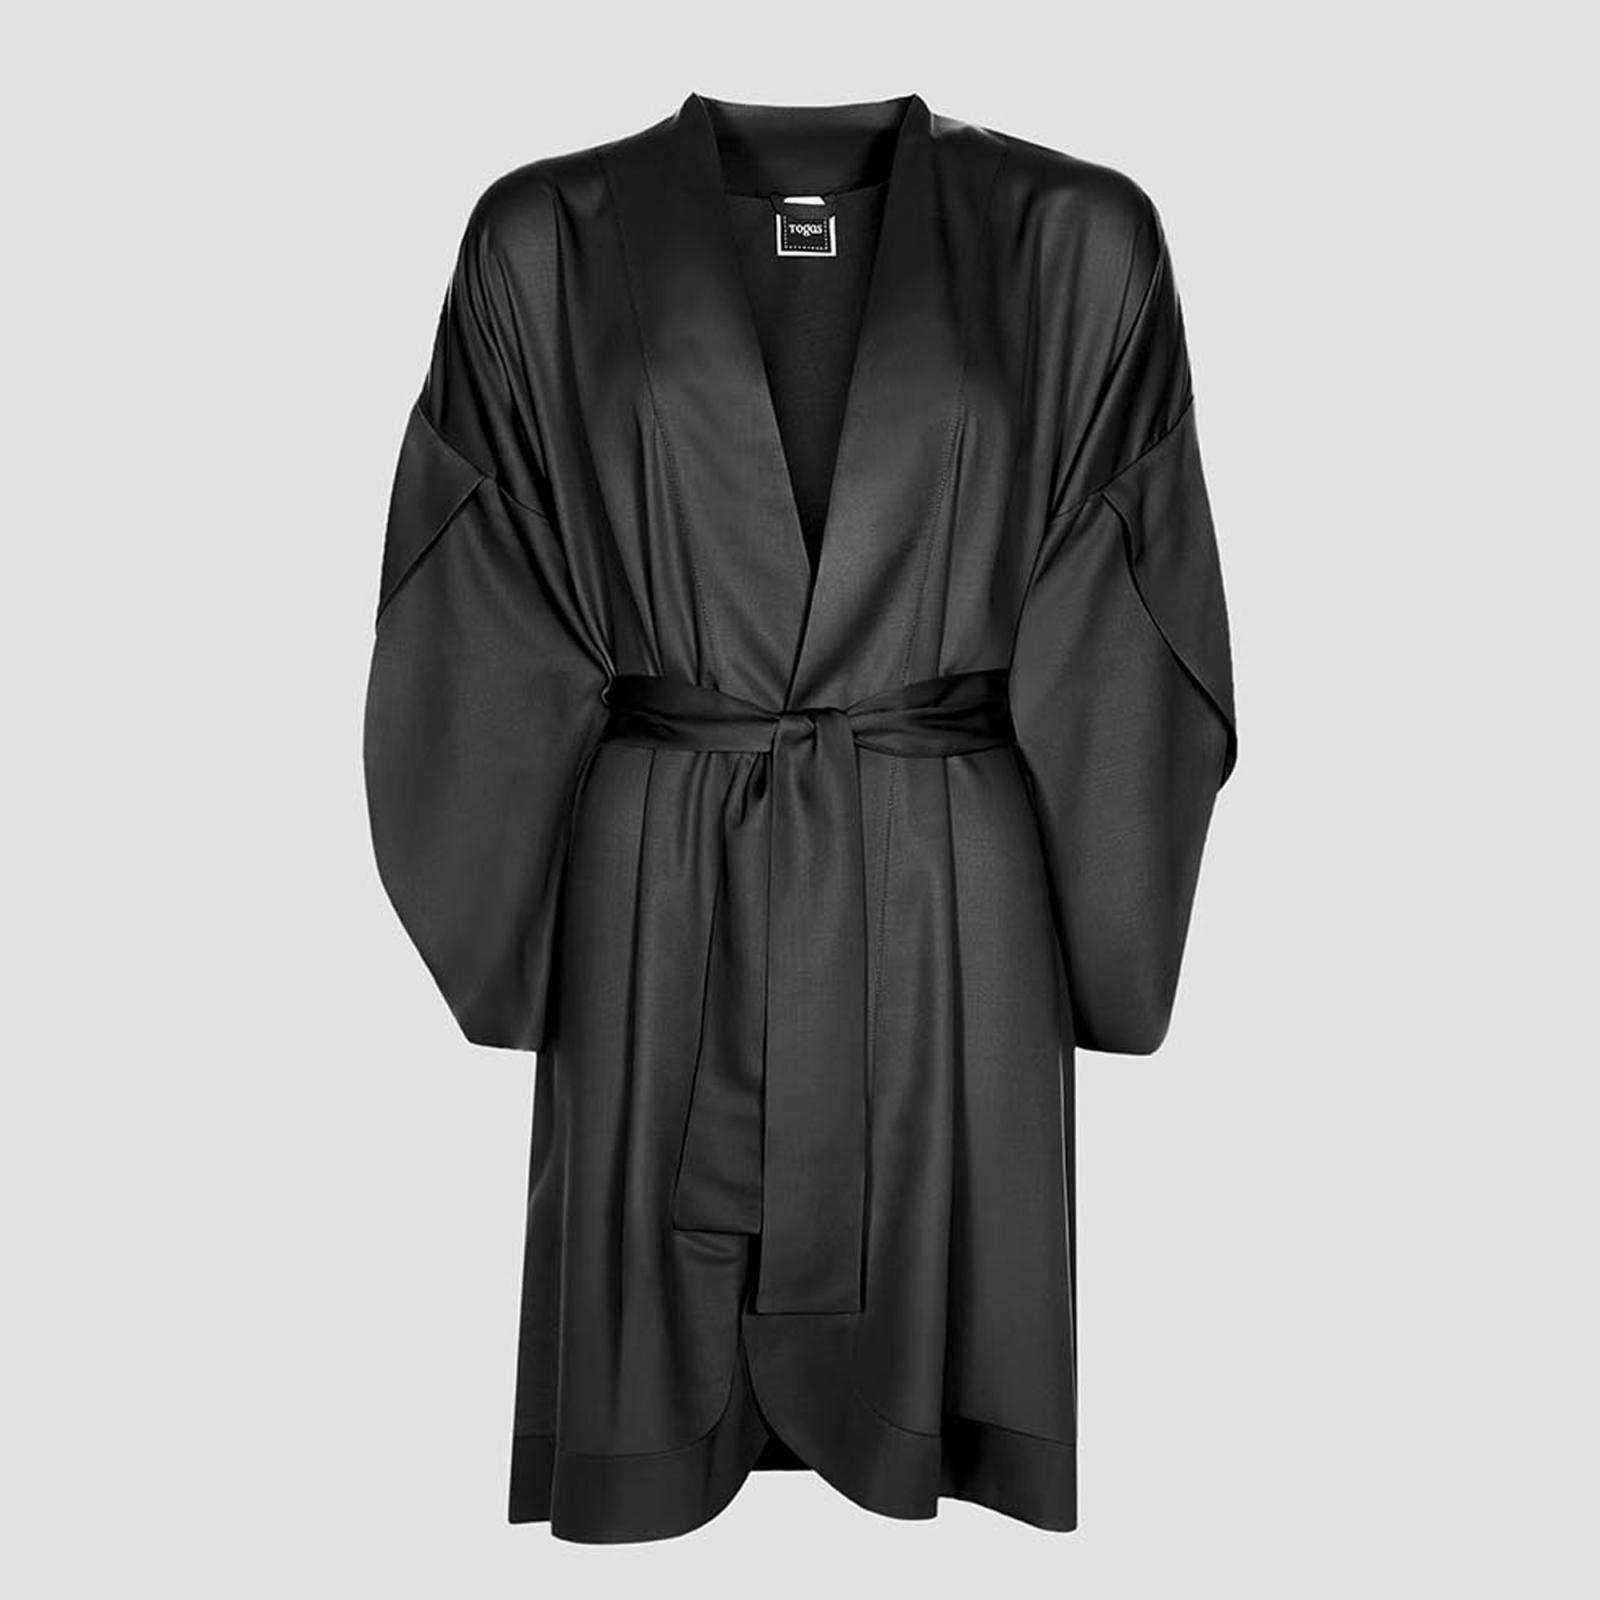 Халат-кимоно короткое Togas Наоми чёрное S (44) халат кимоно короткое togas наоми чёрное м 46